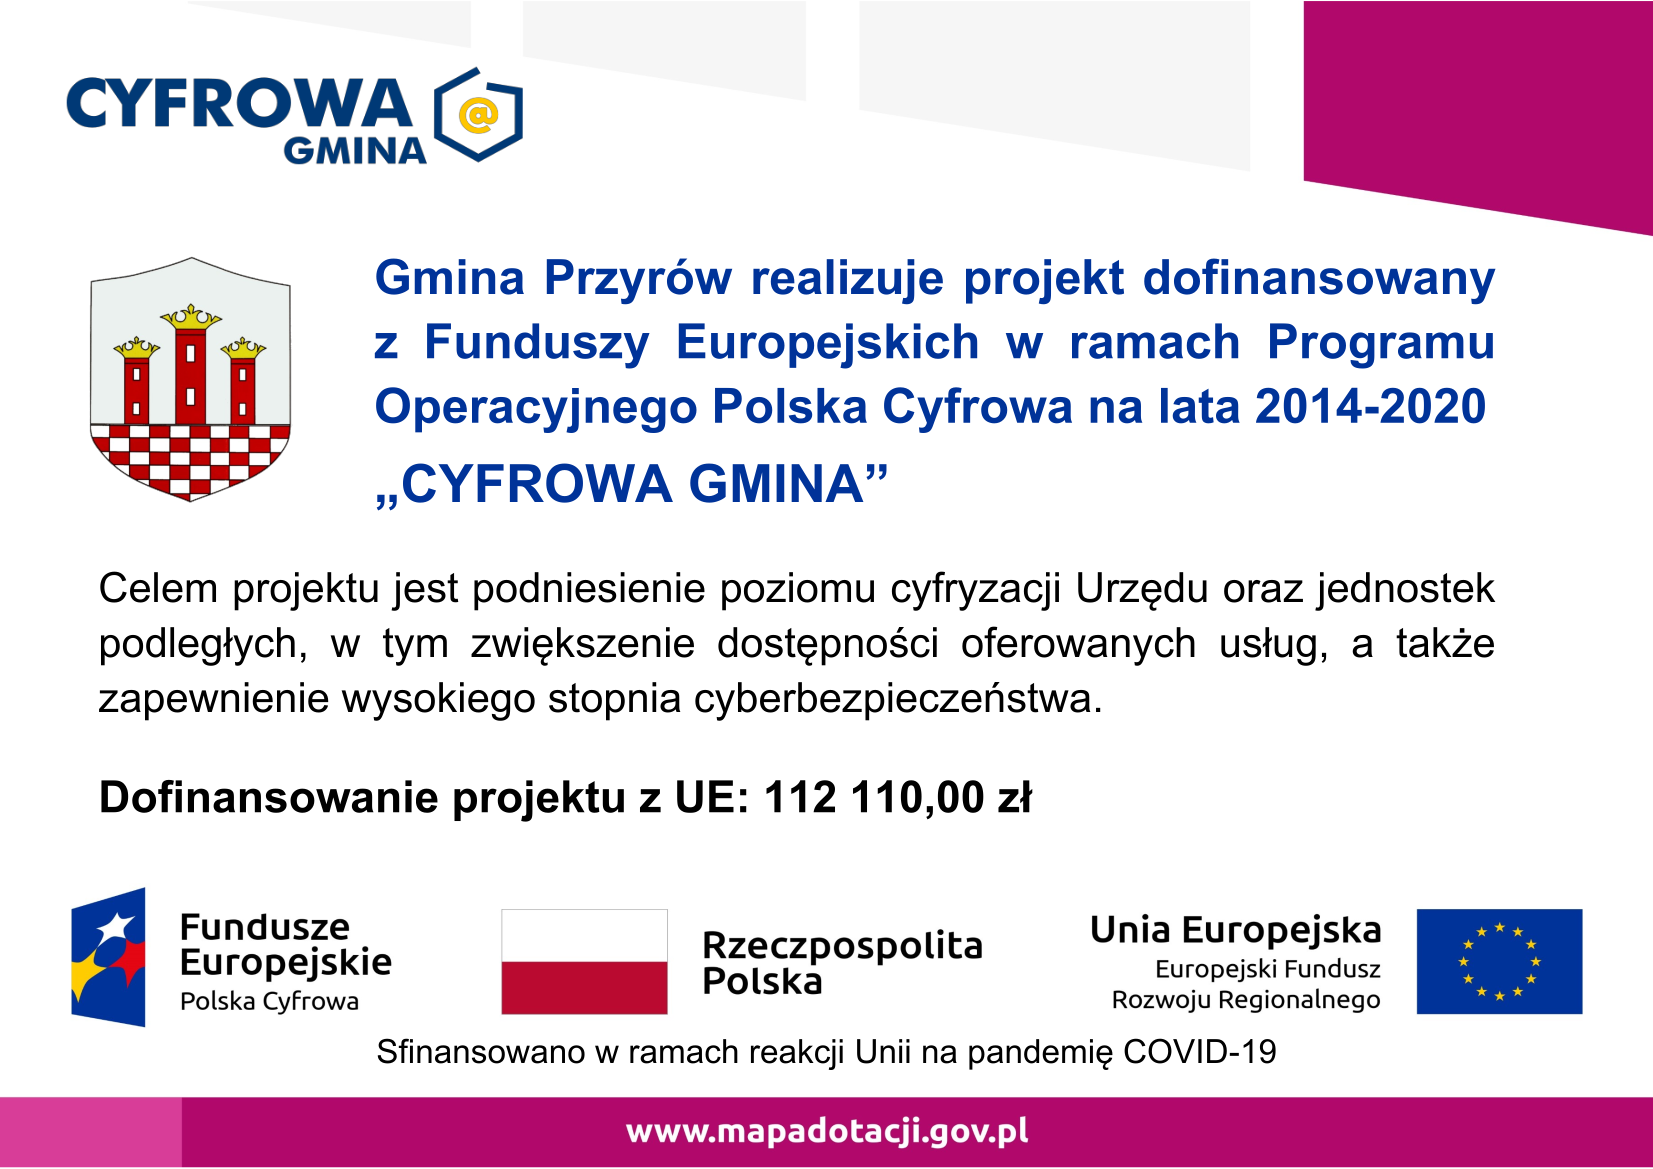 Plakat promujący projekt „Cyfrowa Gmina”.